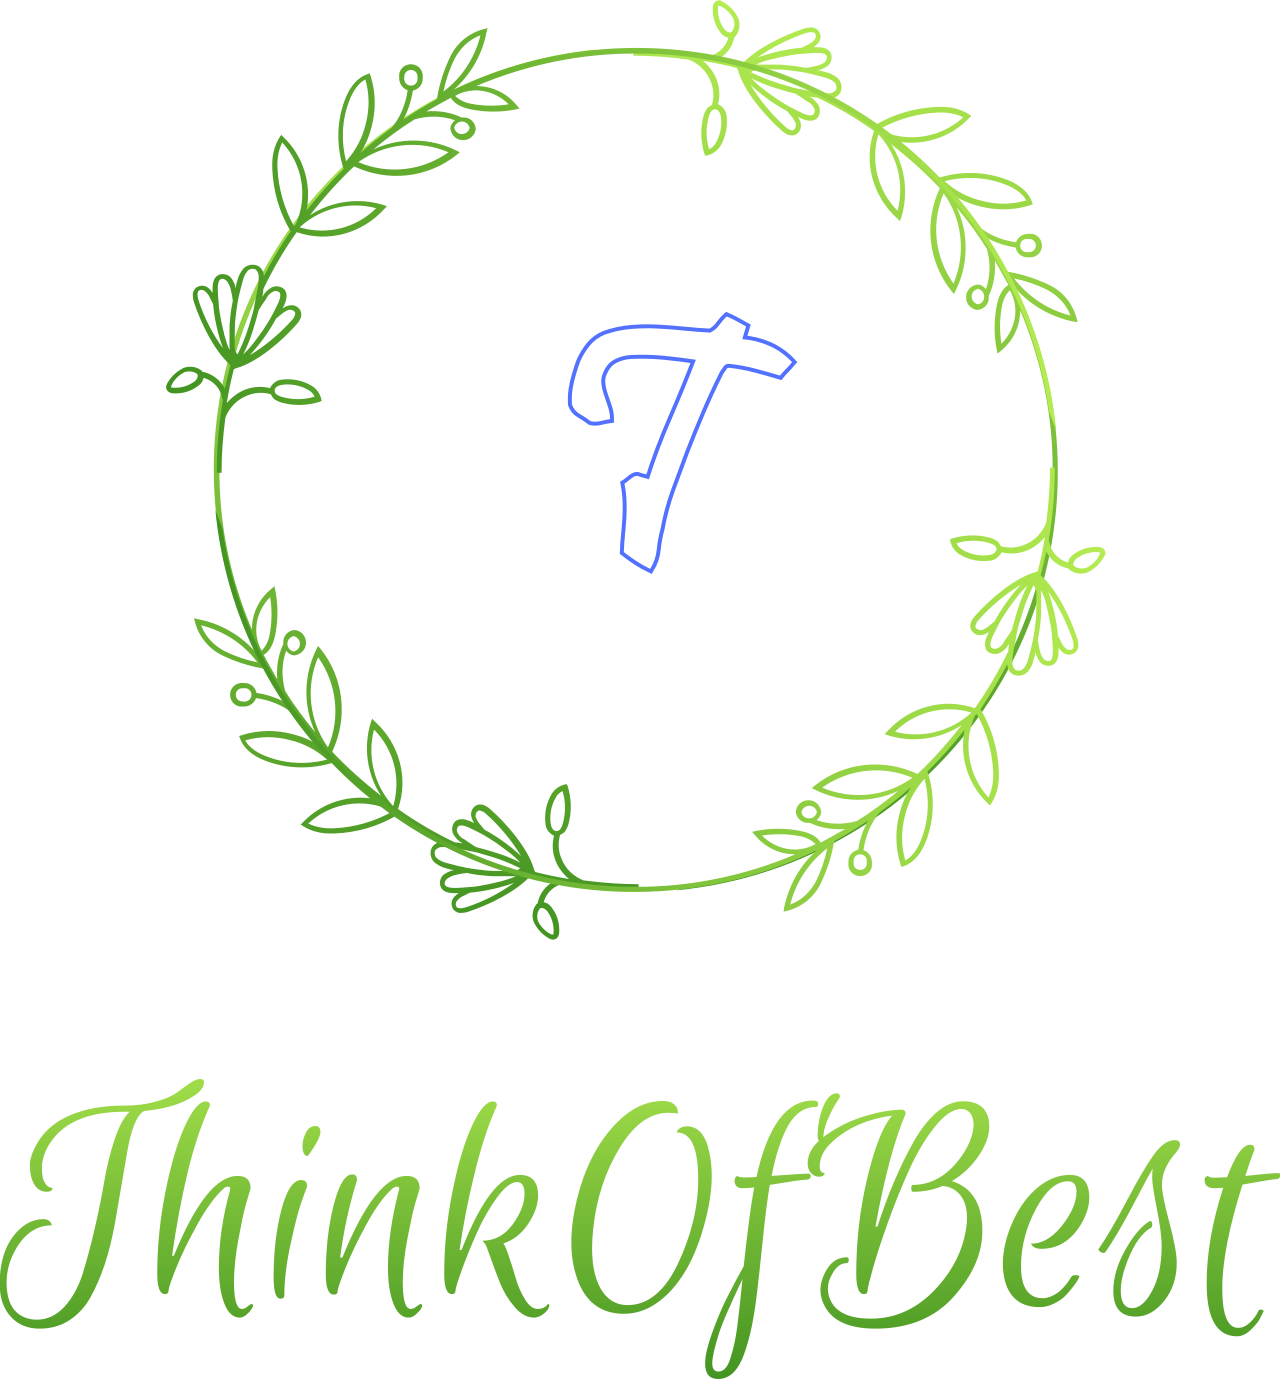 ThinkOfBest's logo